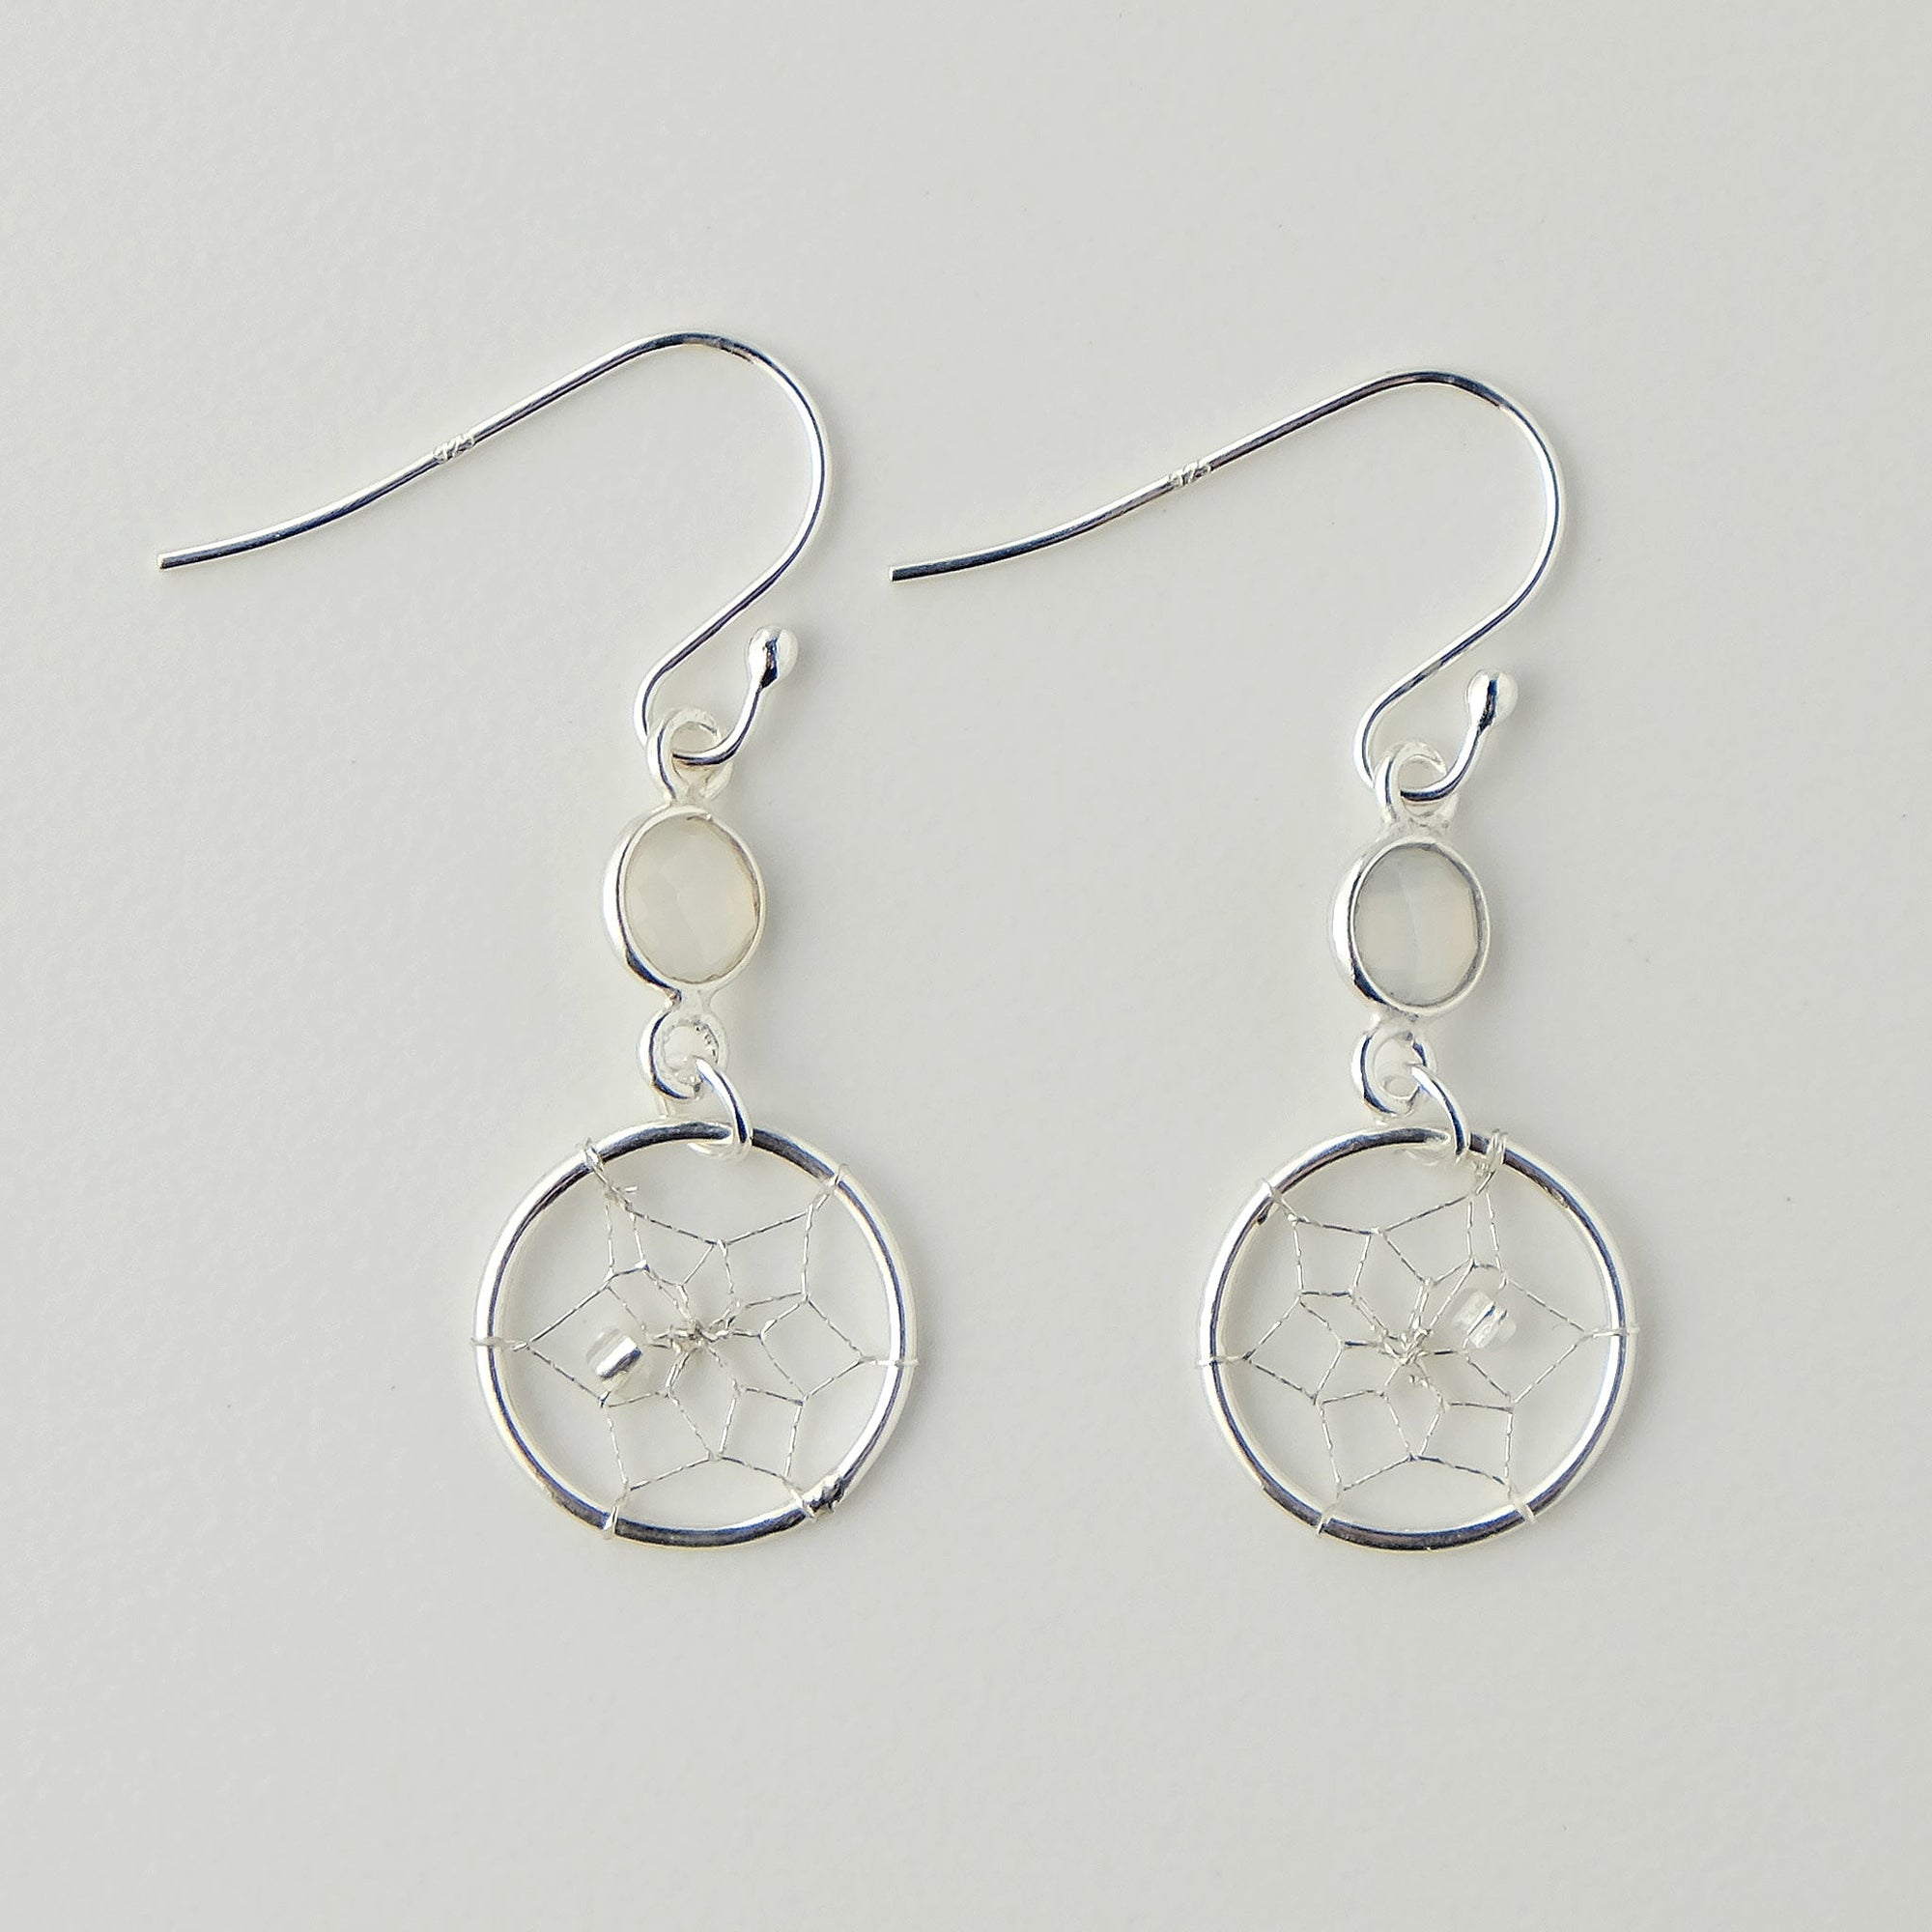 Earrings Birthstone "June" Sterling Silver Jewellery